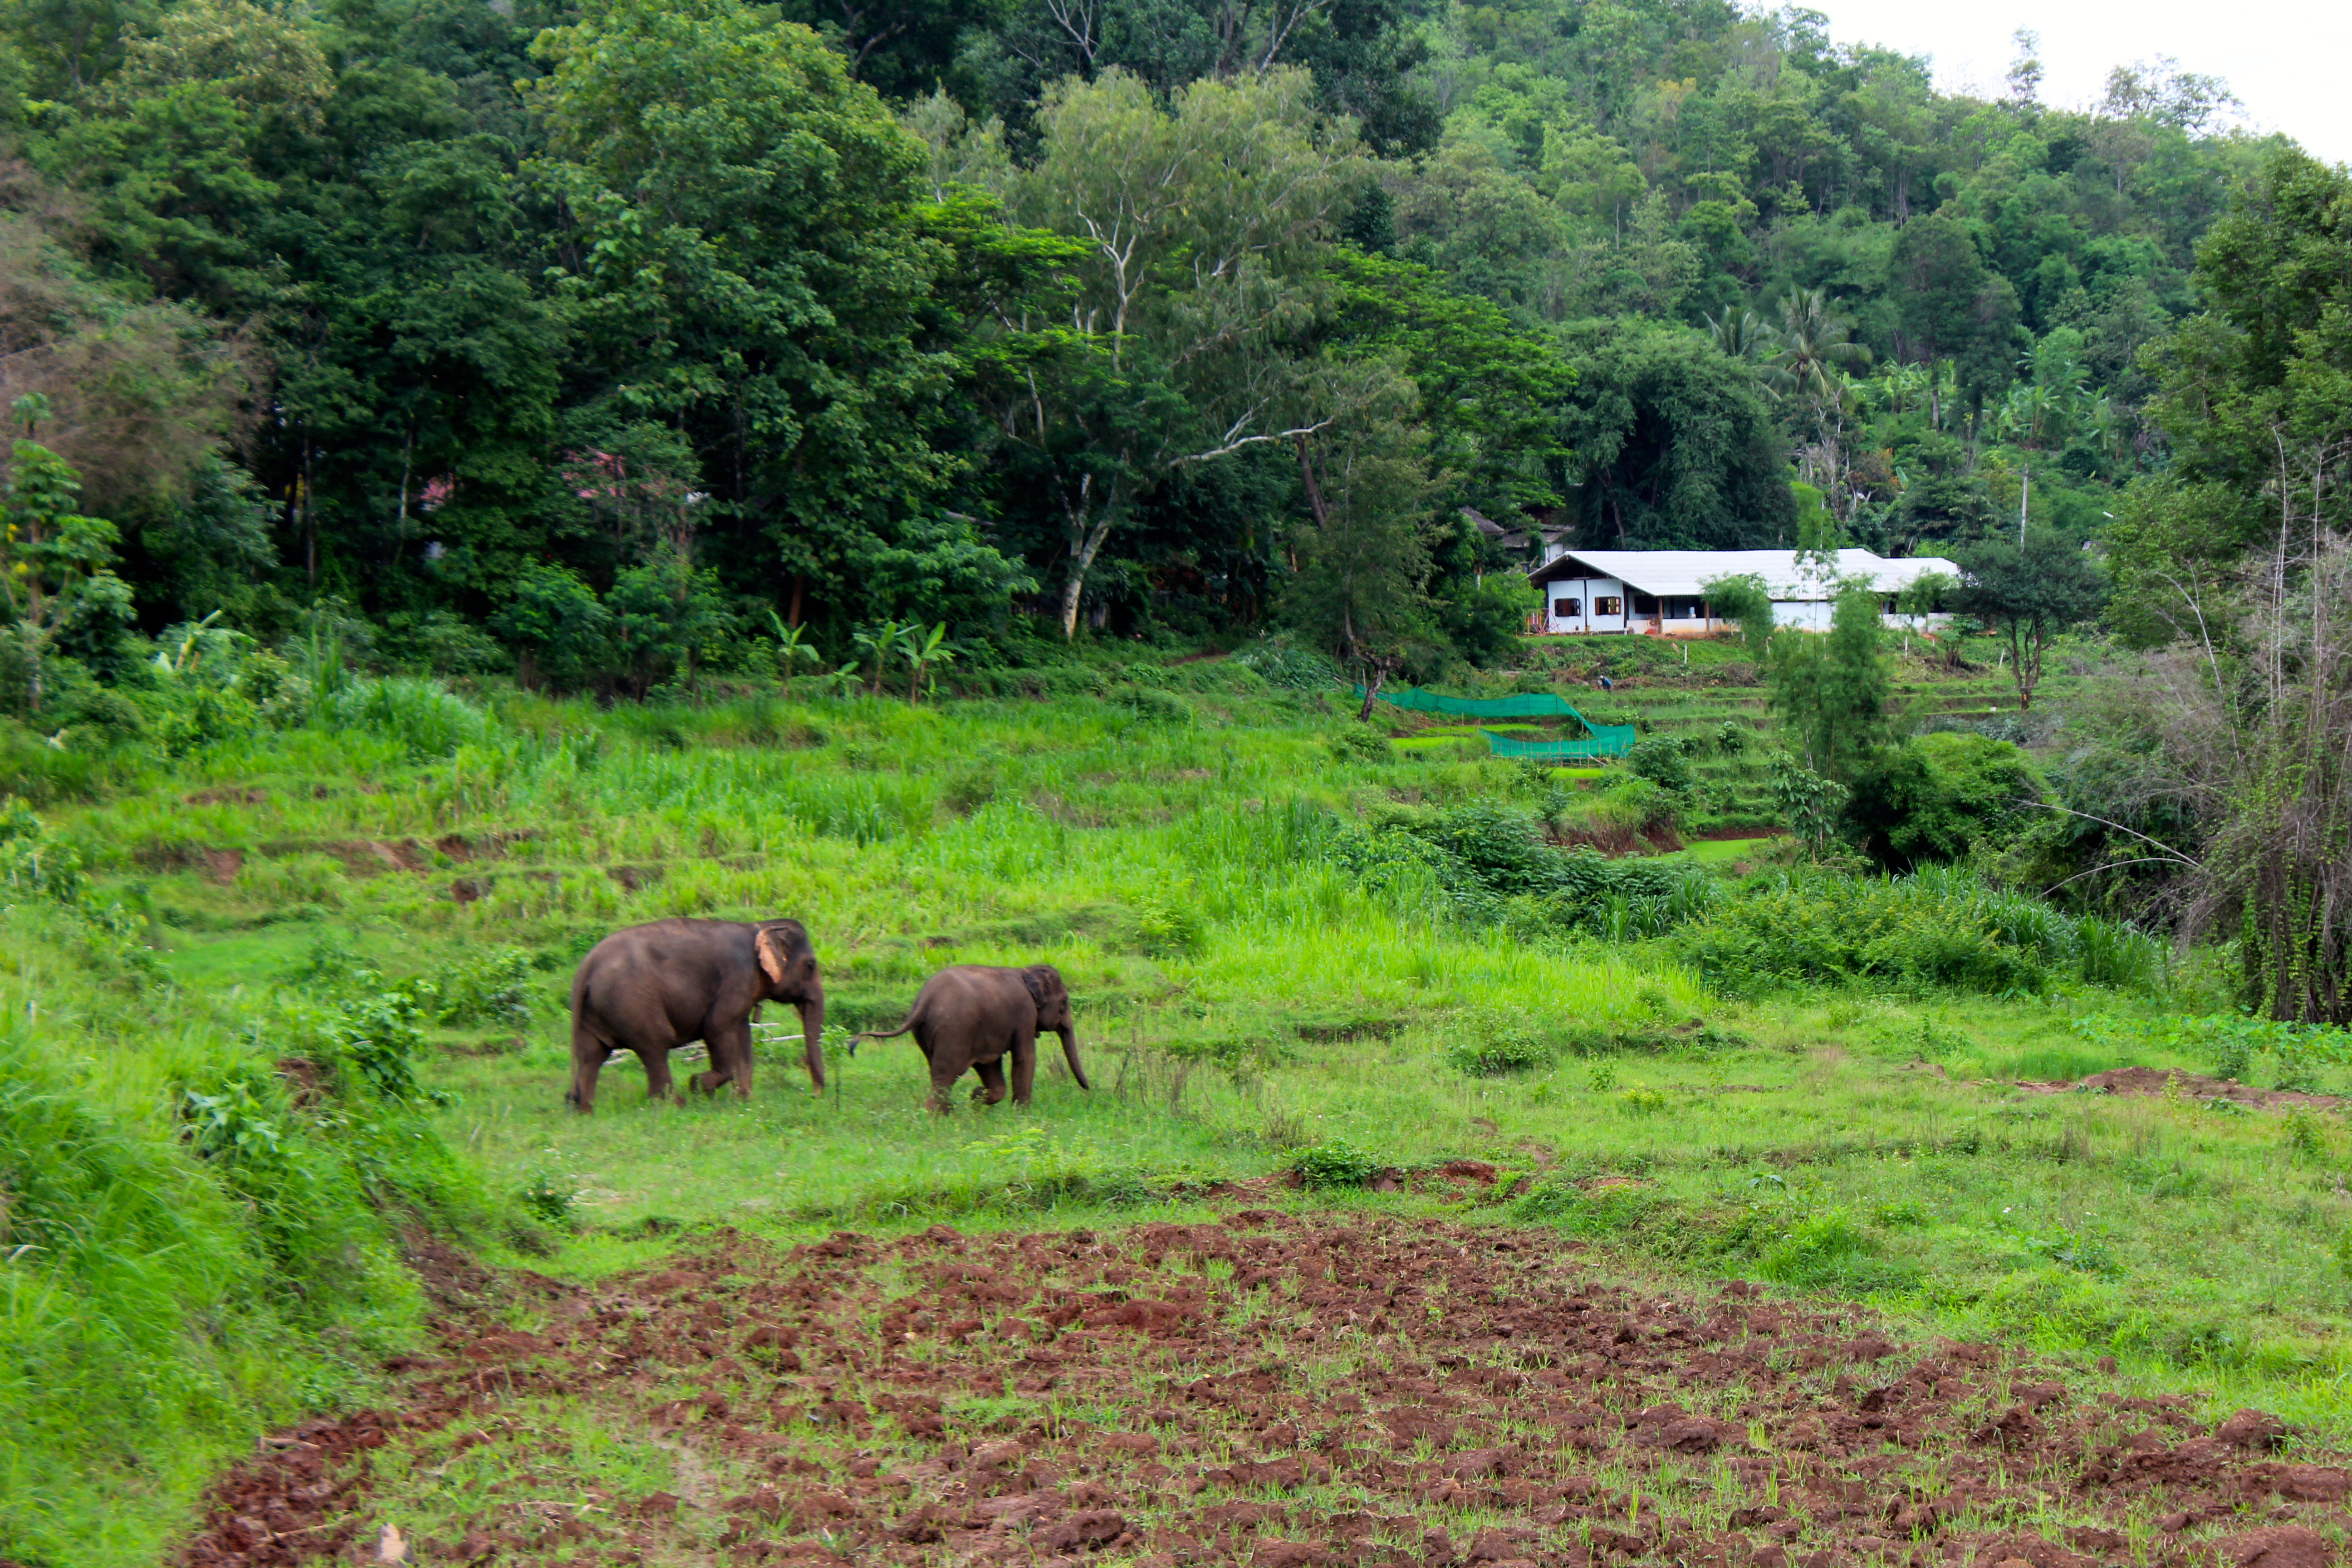 Elephants freely roaming around at The Elephant Jungle Sanctuary.